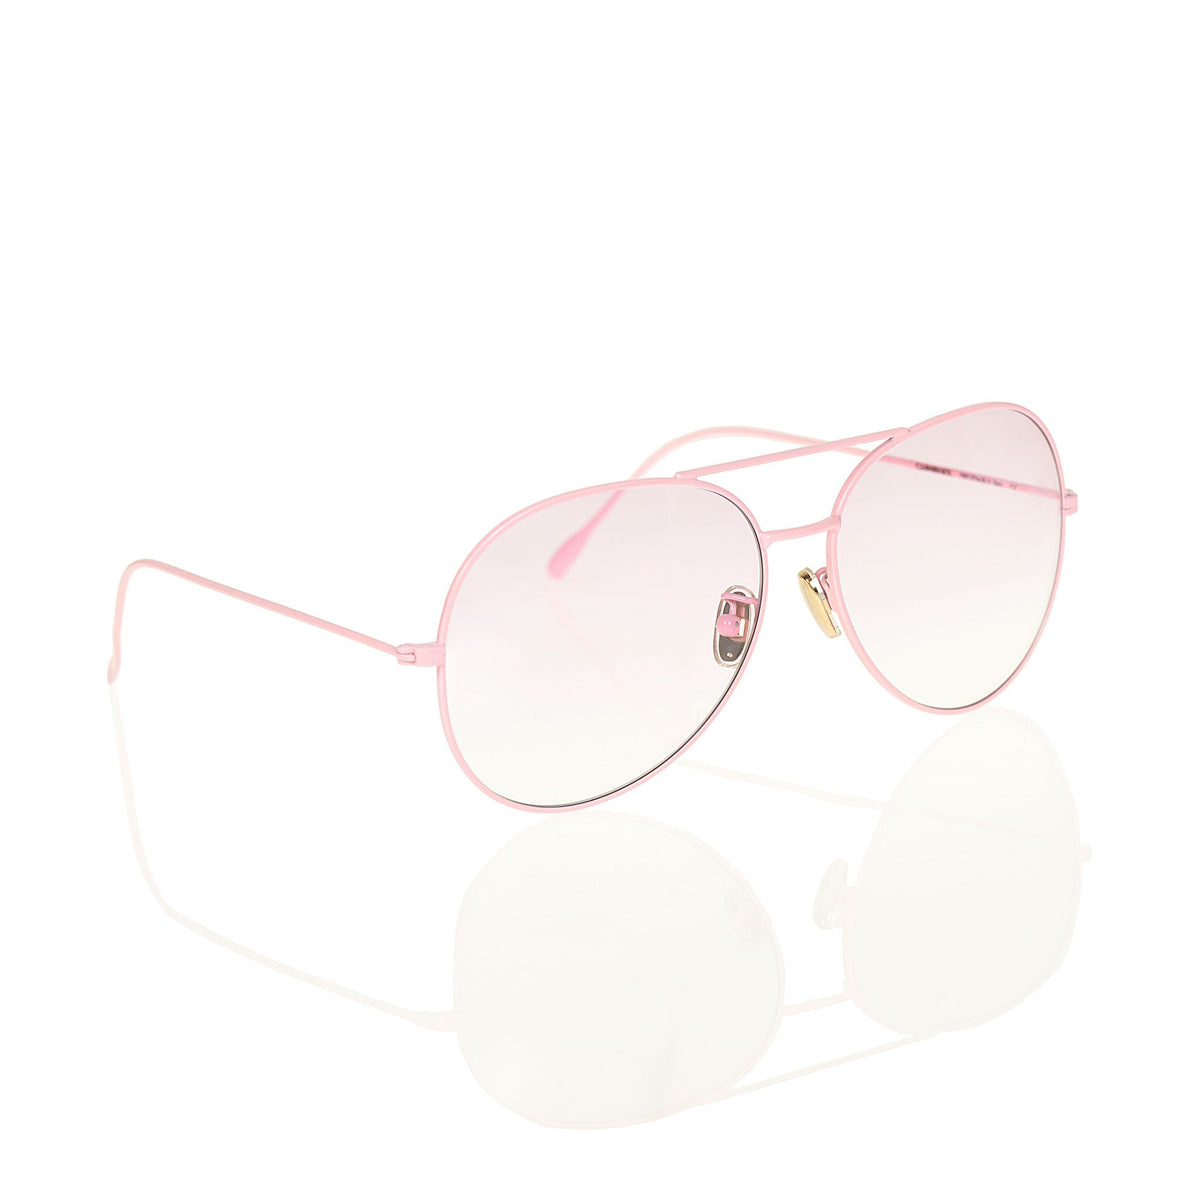 Baby pink aviators, sunglasses for women, pink sunglasses